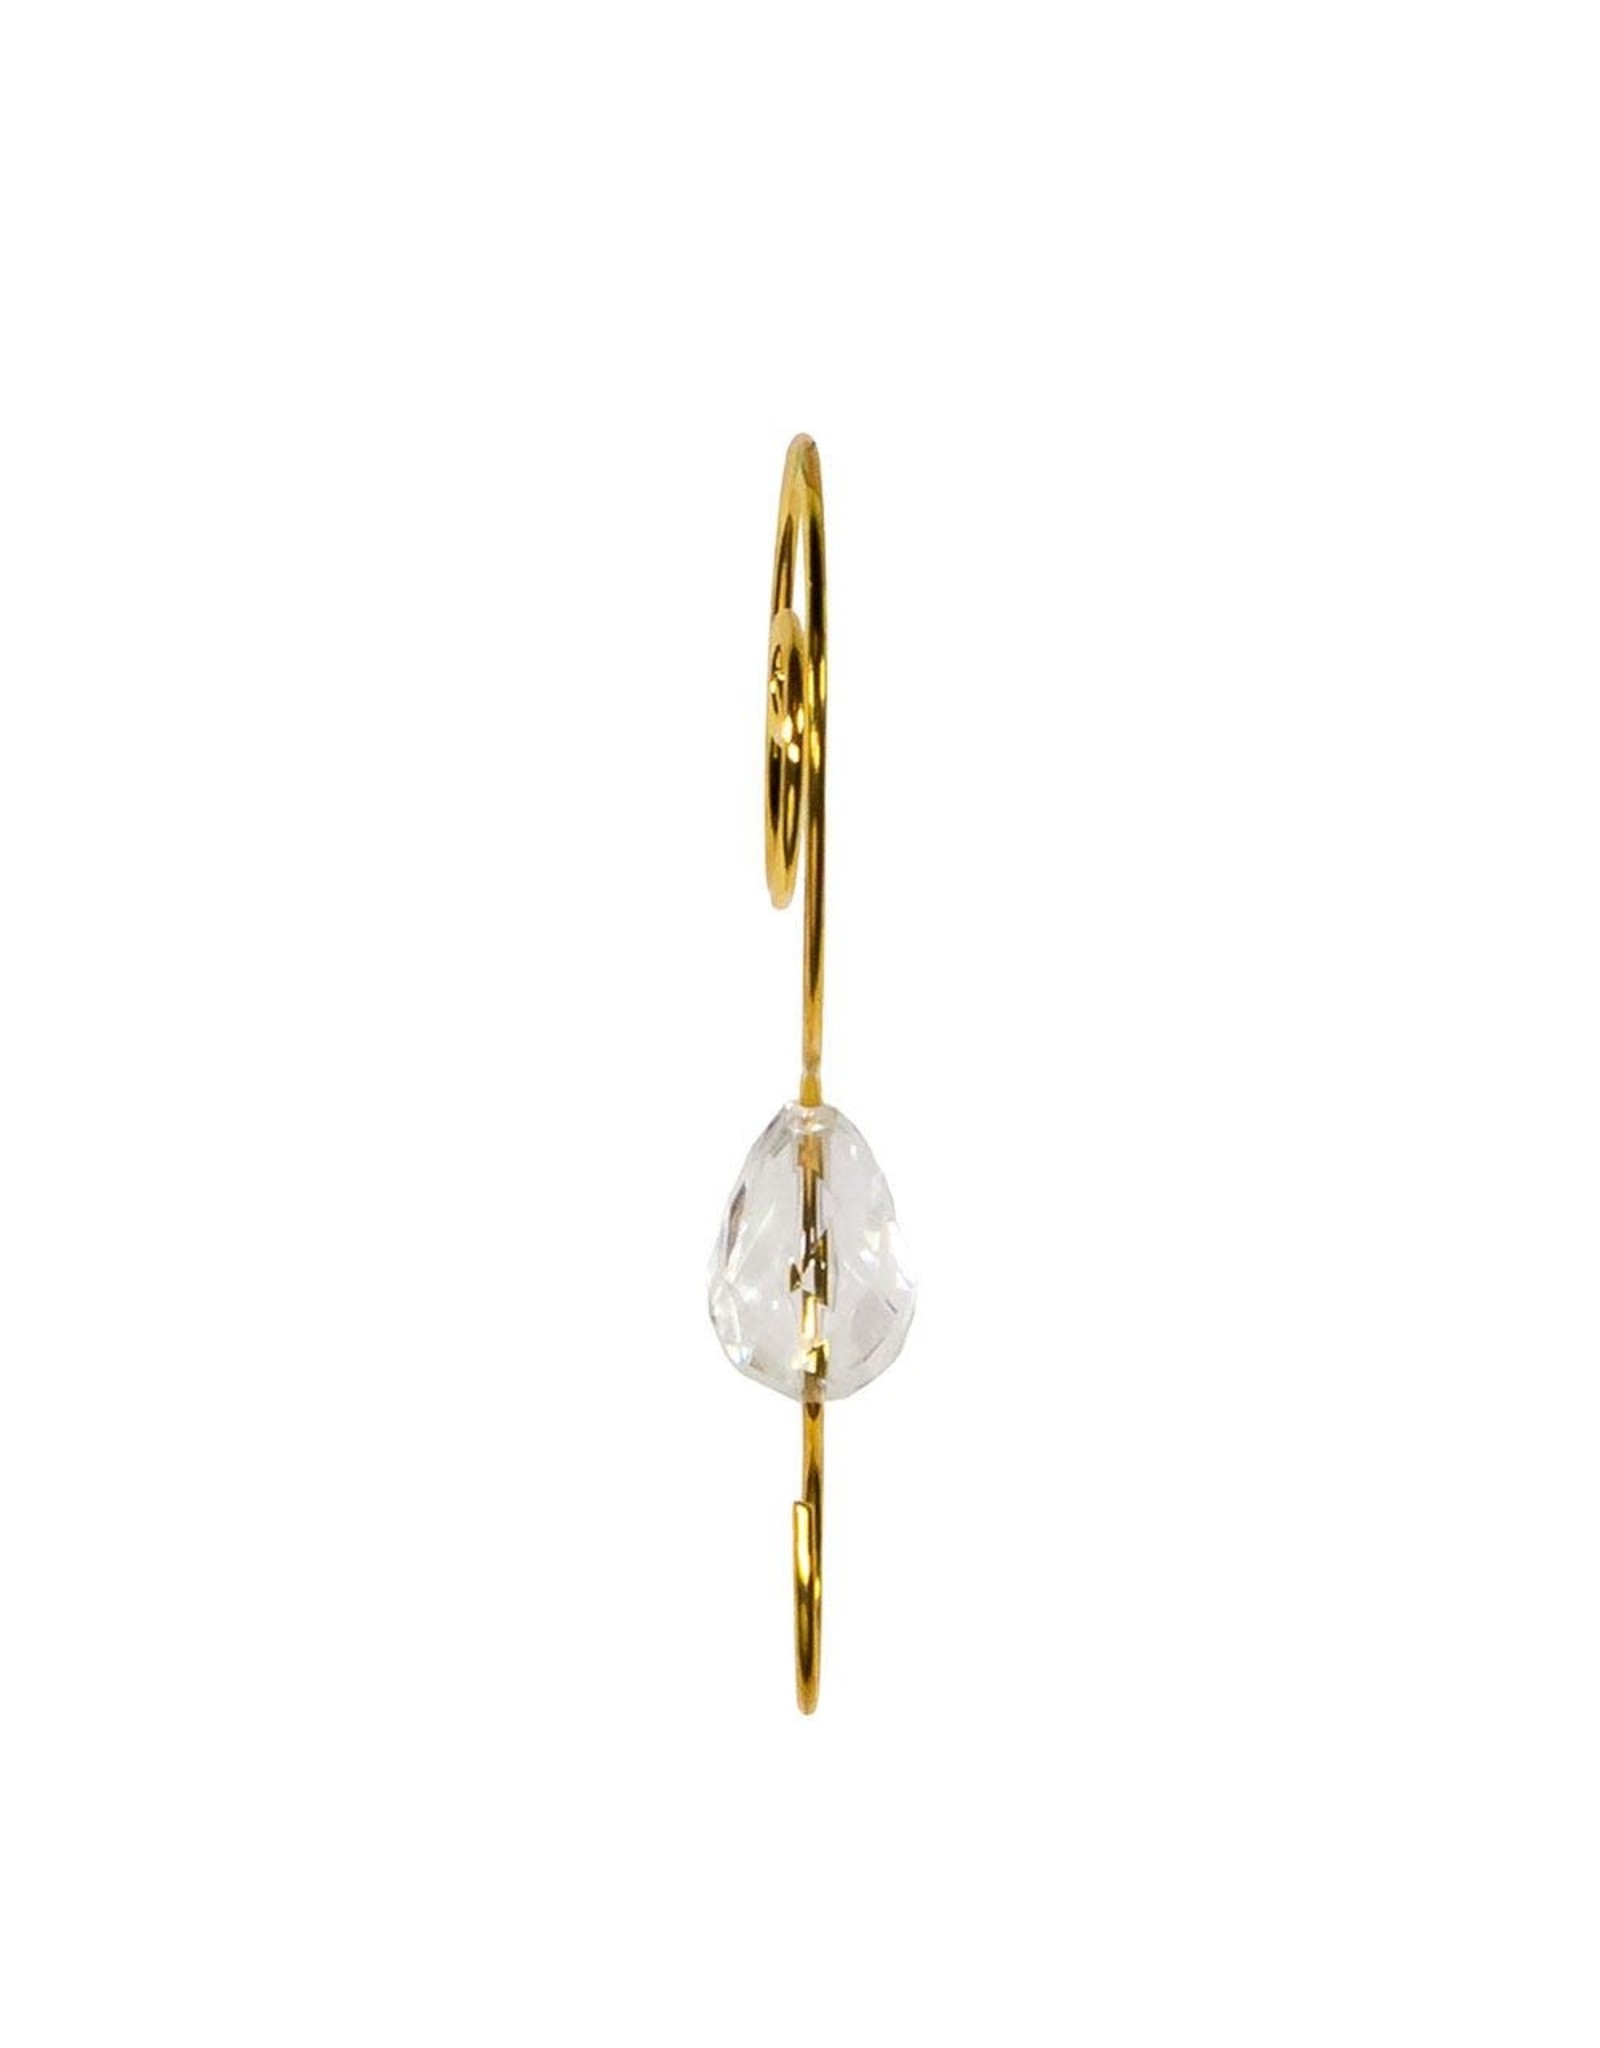 Kurt Adler Christmas Ornament Hooks Gold Wire w Acrylic Jewel 24pc - Digs N  Gifts